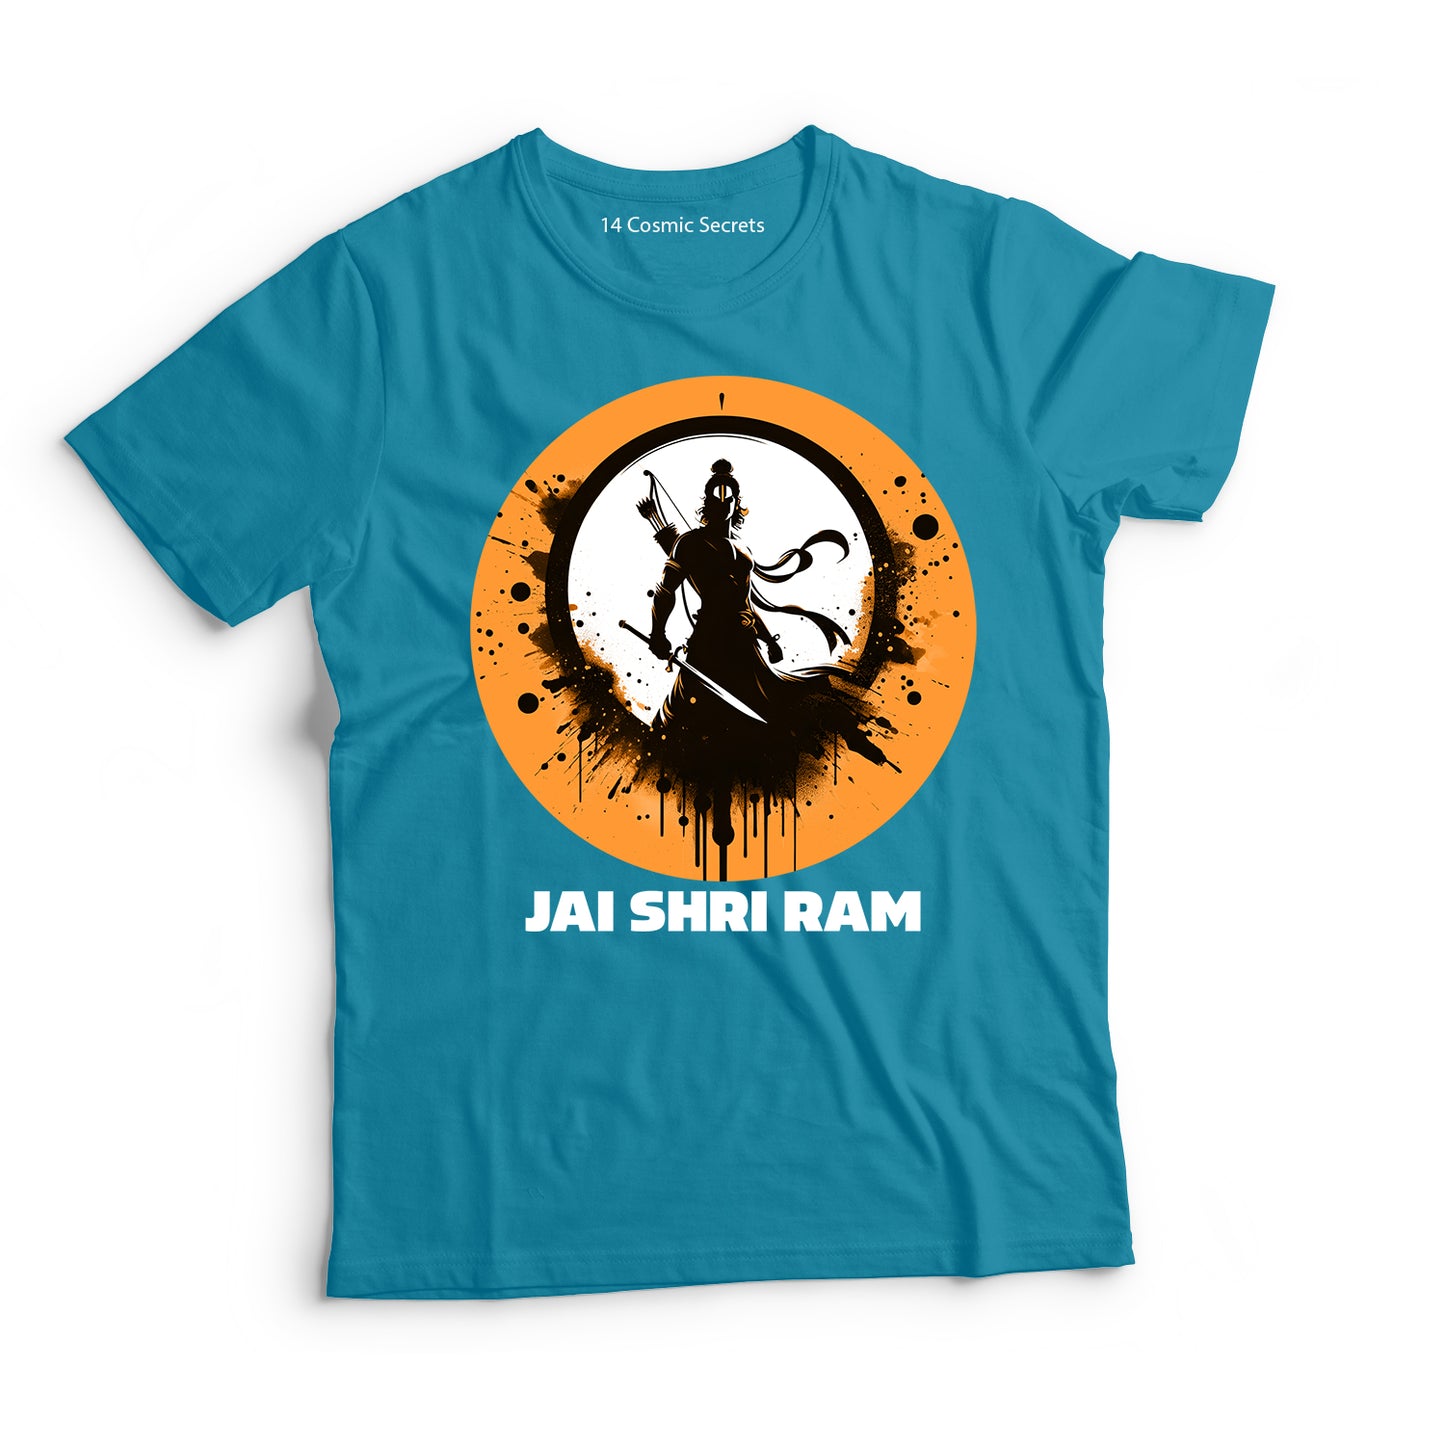 Ayodhya's Pride: Rama Silhouette Graphic Printed T-Shirt for Men Cotton T-Shirt Original Super Heroes of India T-Shirt